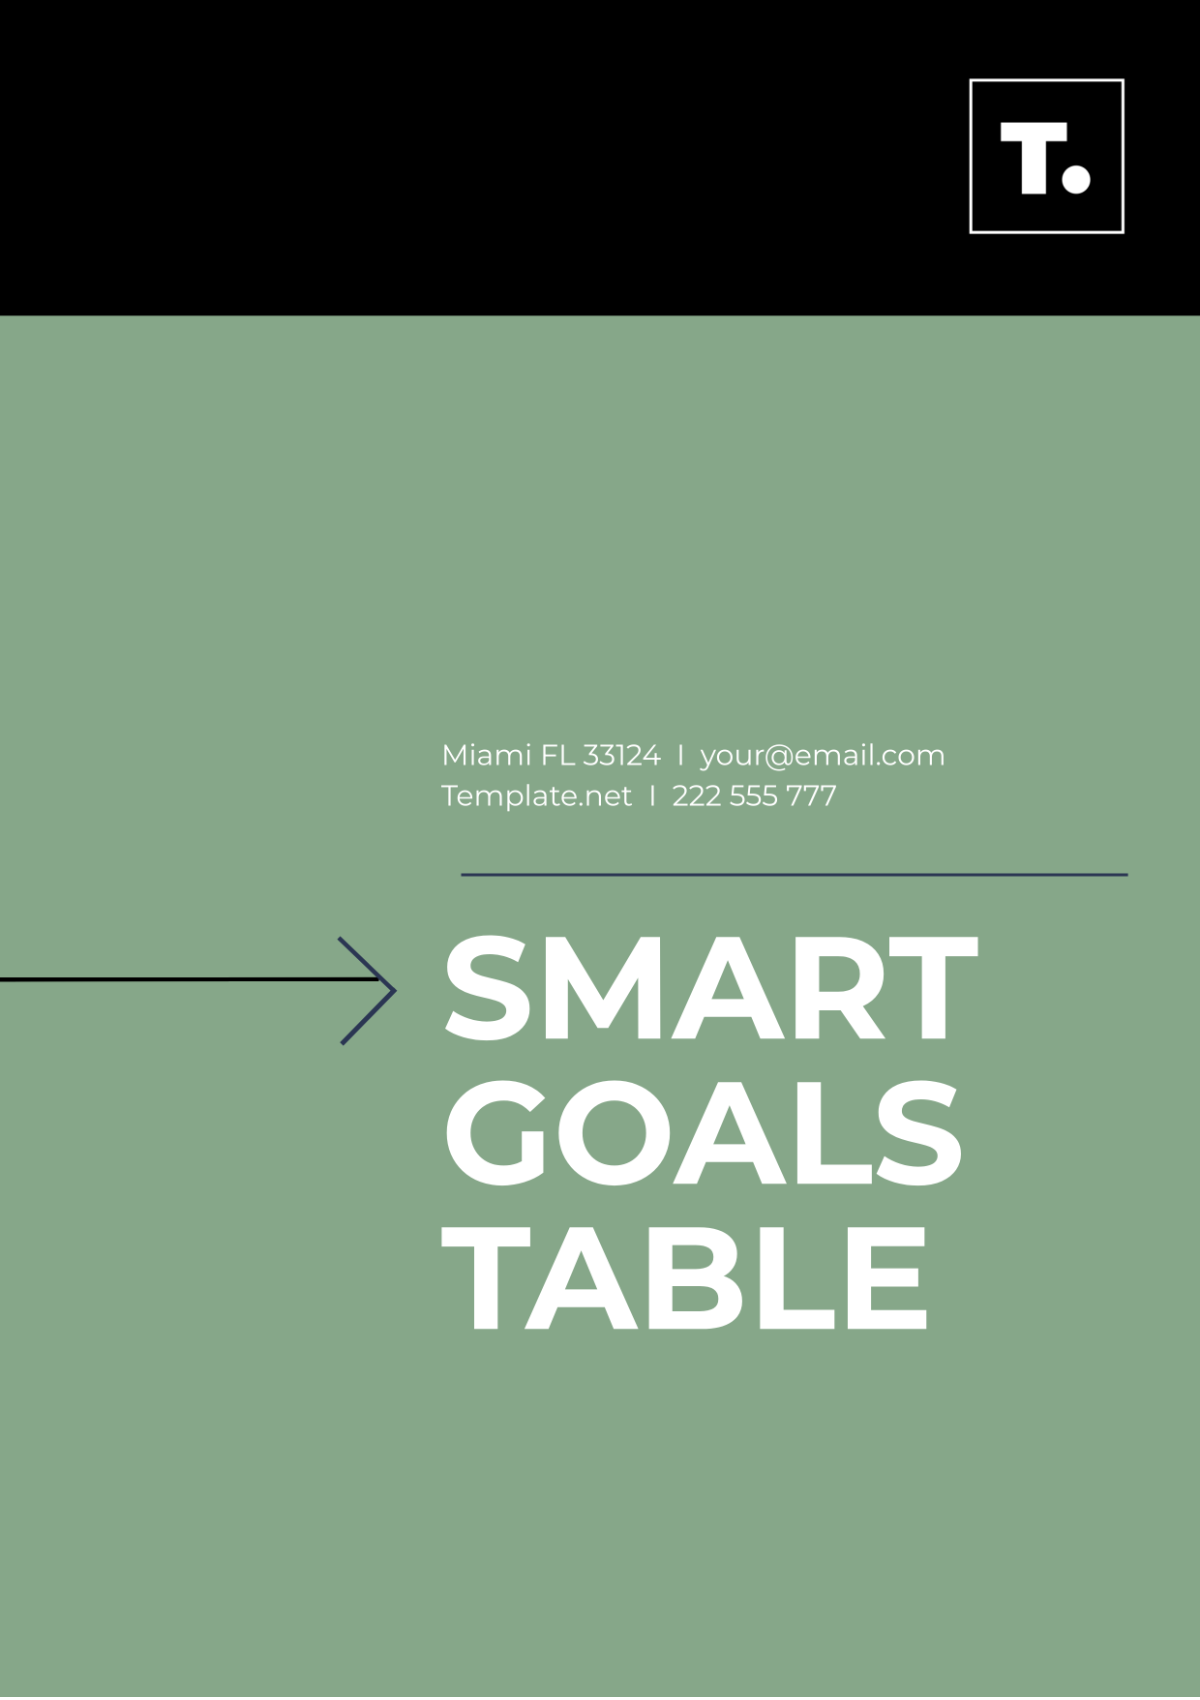 SMART Goals Table Template